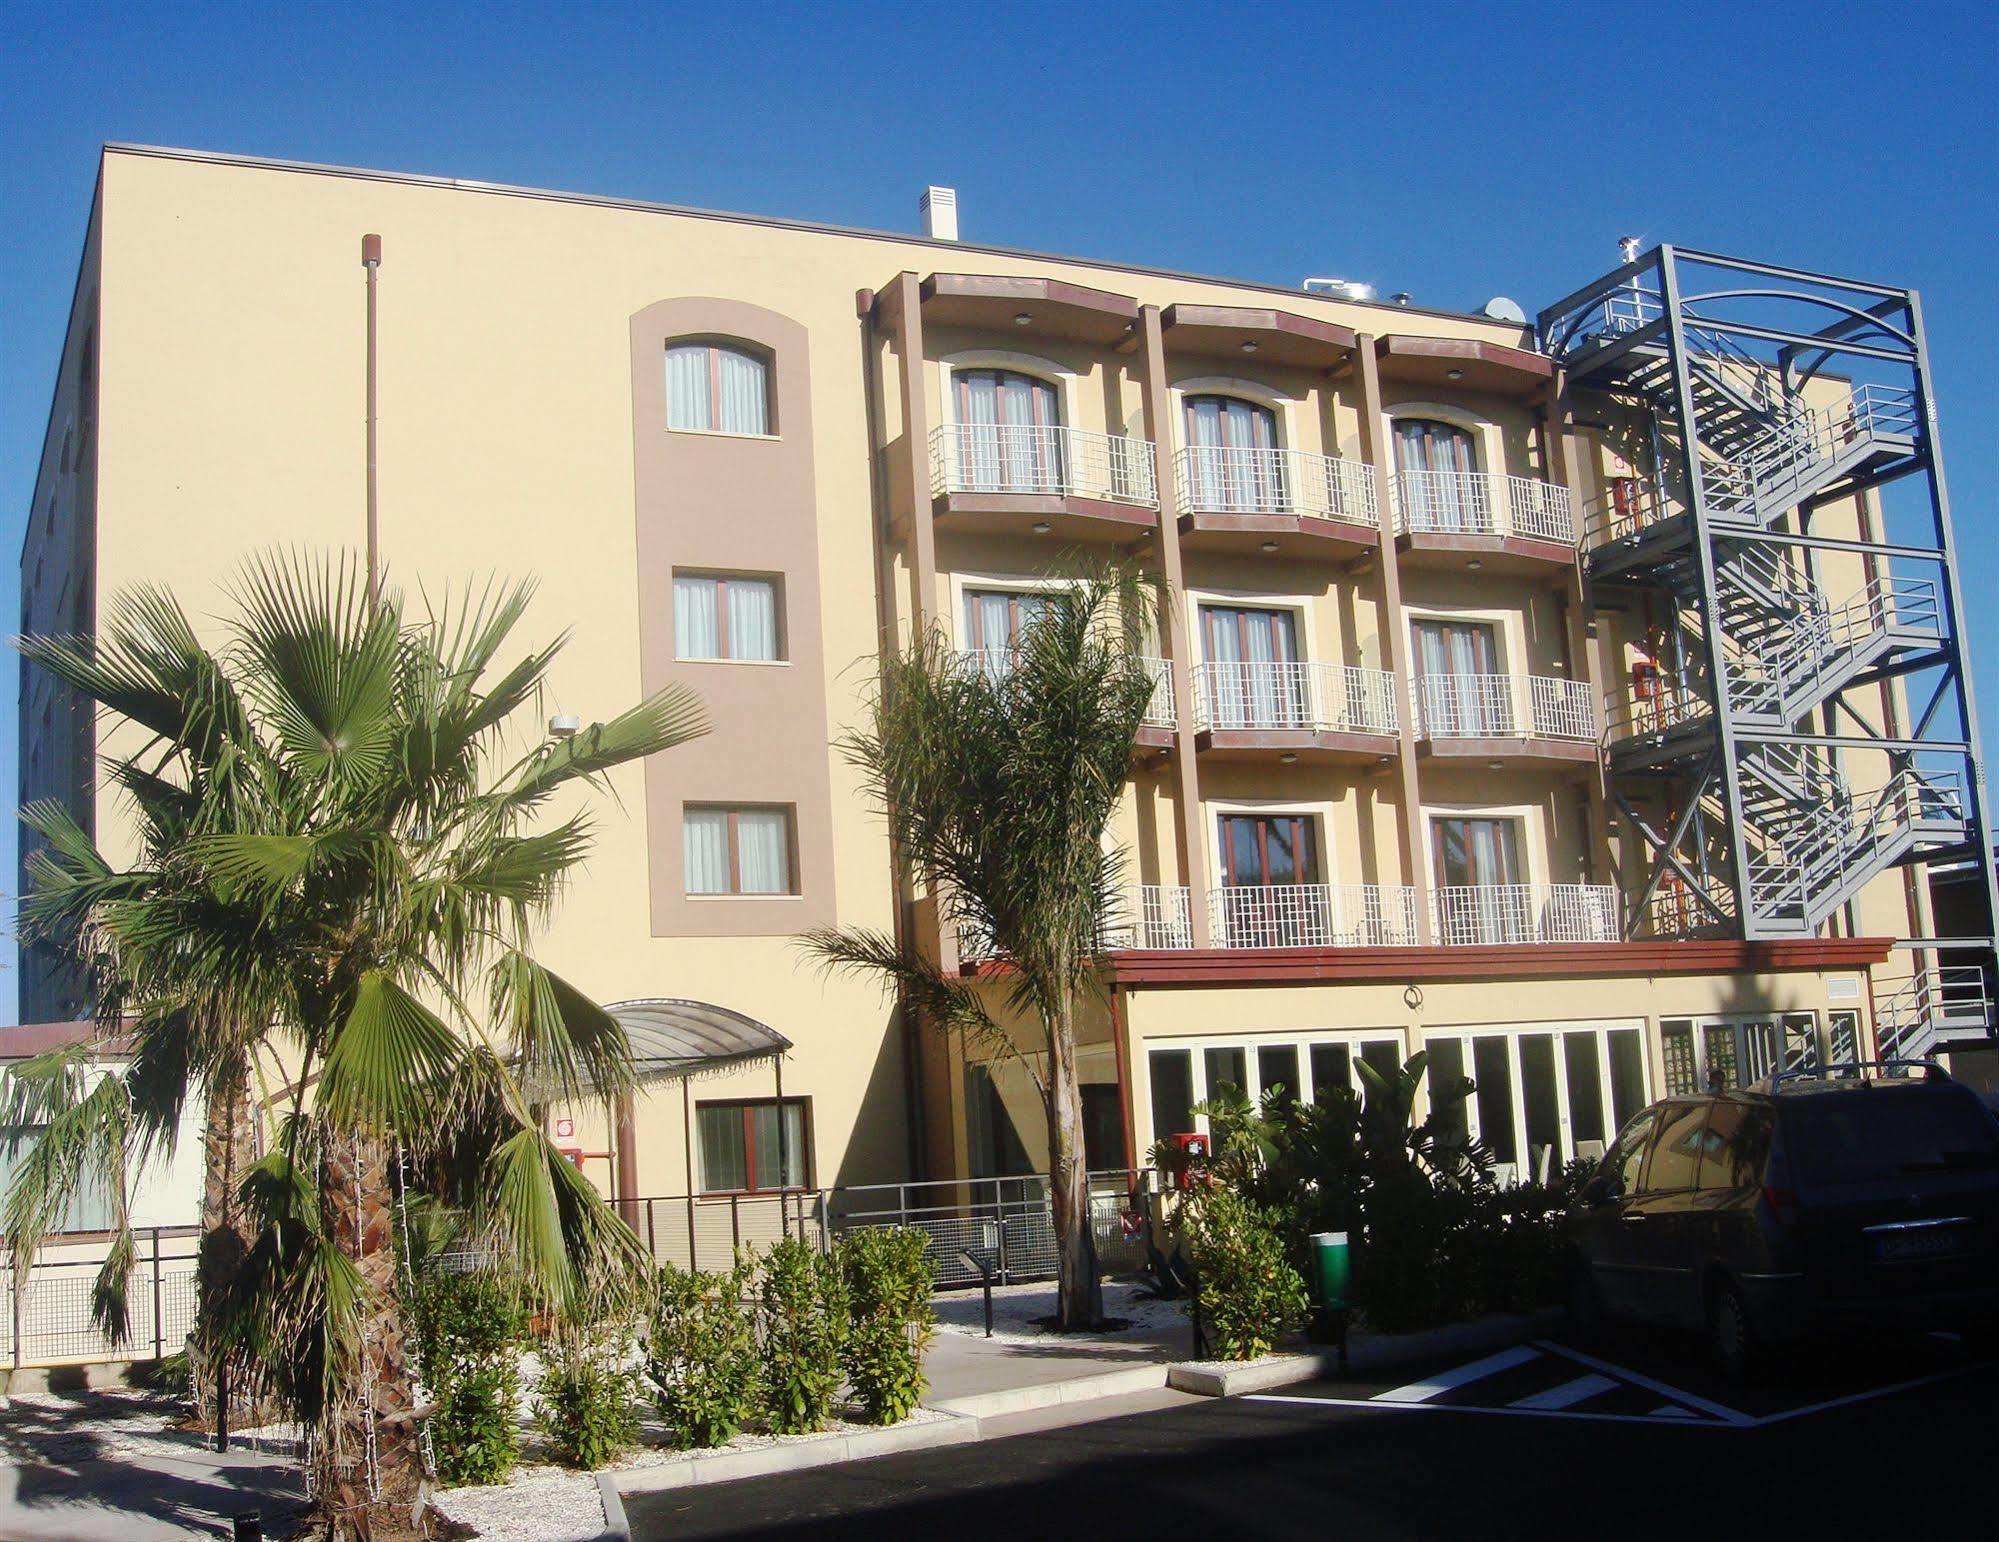 Viola Palace Hotel Villafranca Tirrena Exterior photo